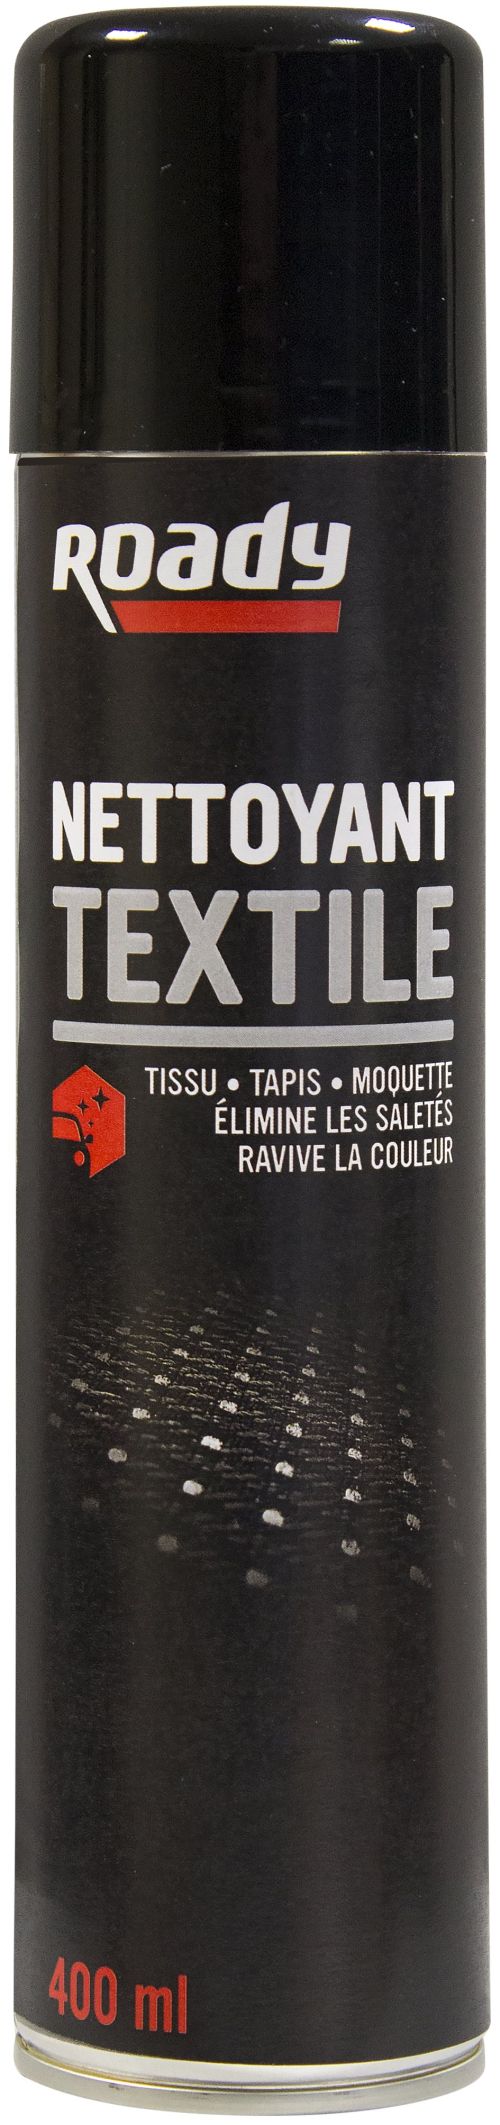 Nettoyant Textile ROADY 400 ml - Roady